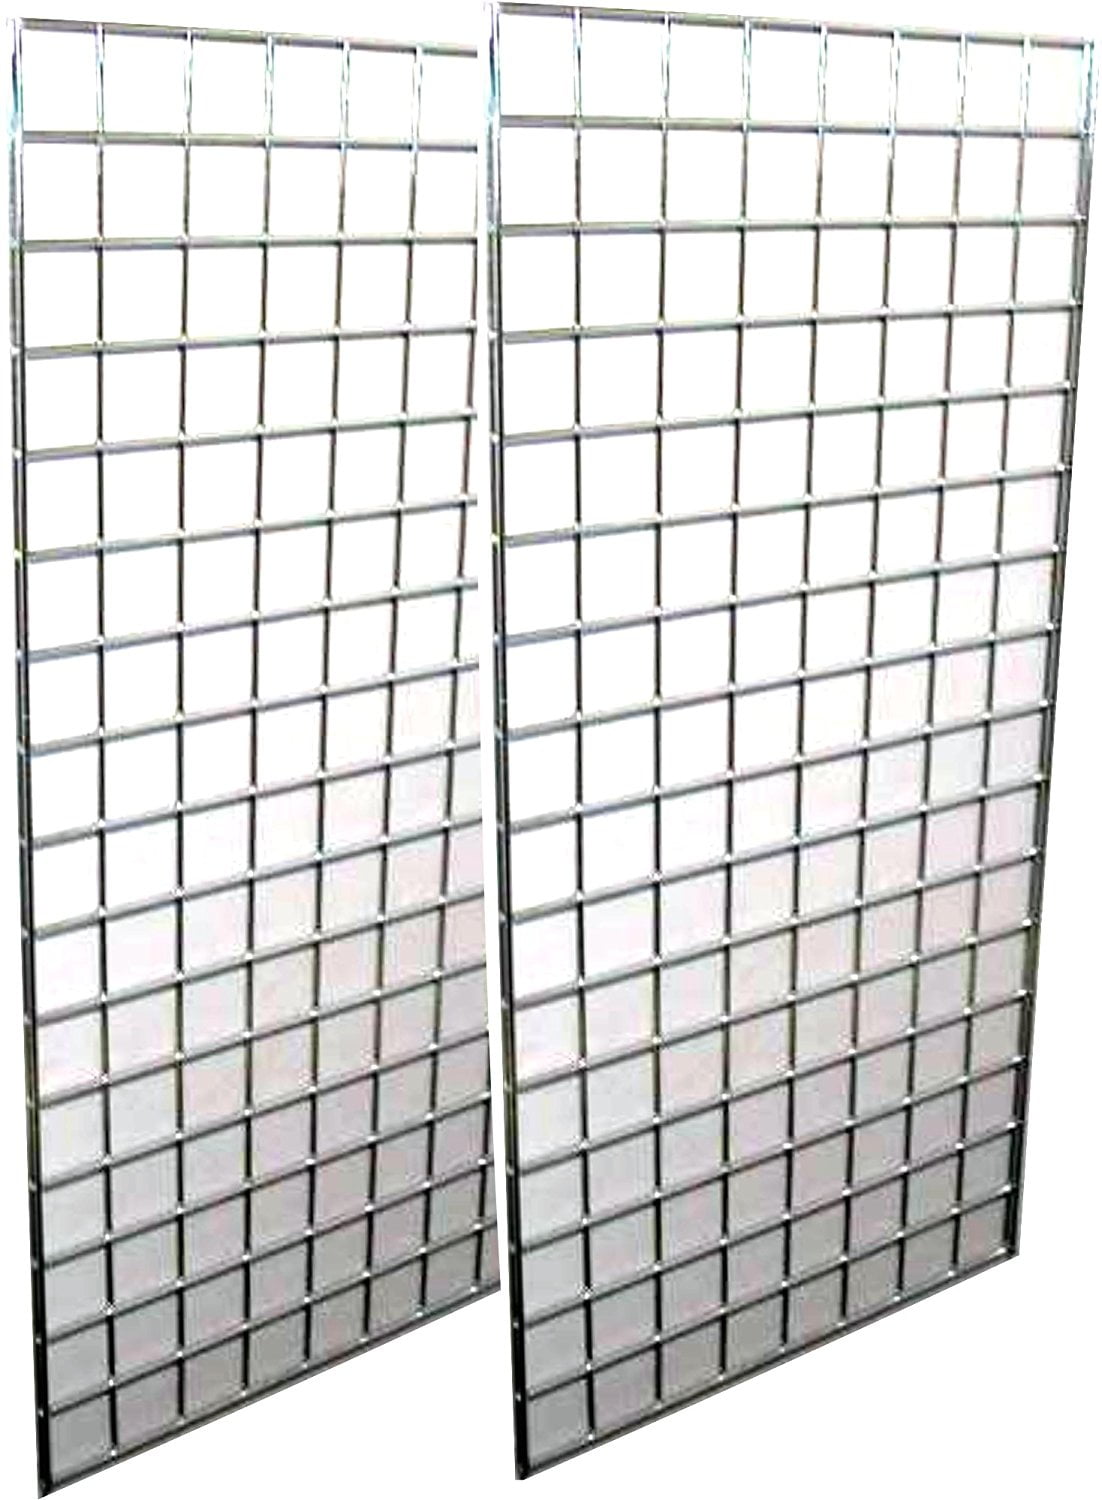 1//4/" dia wire Grid Panel Lot of 3 3/" x 3/" squares 12/" x 60/" Black